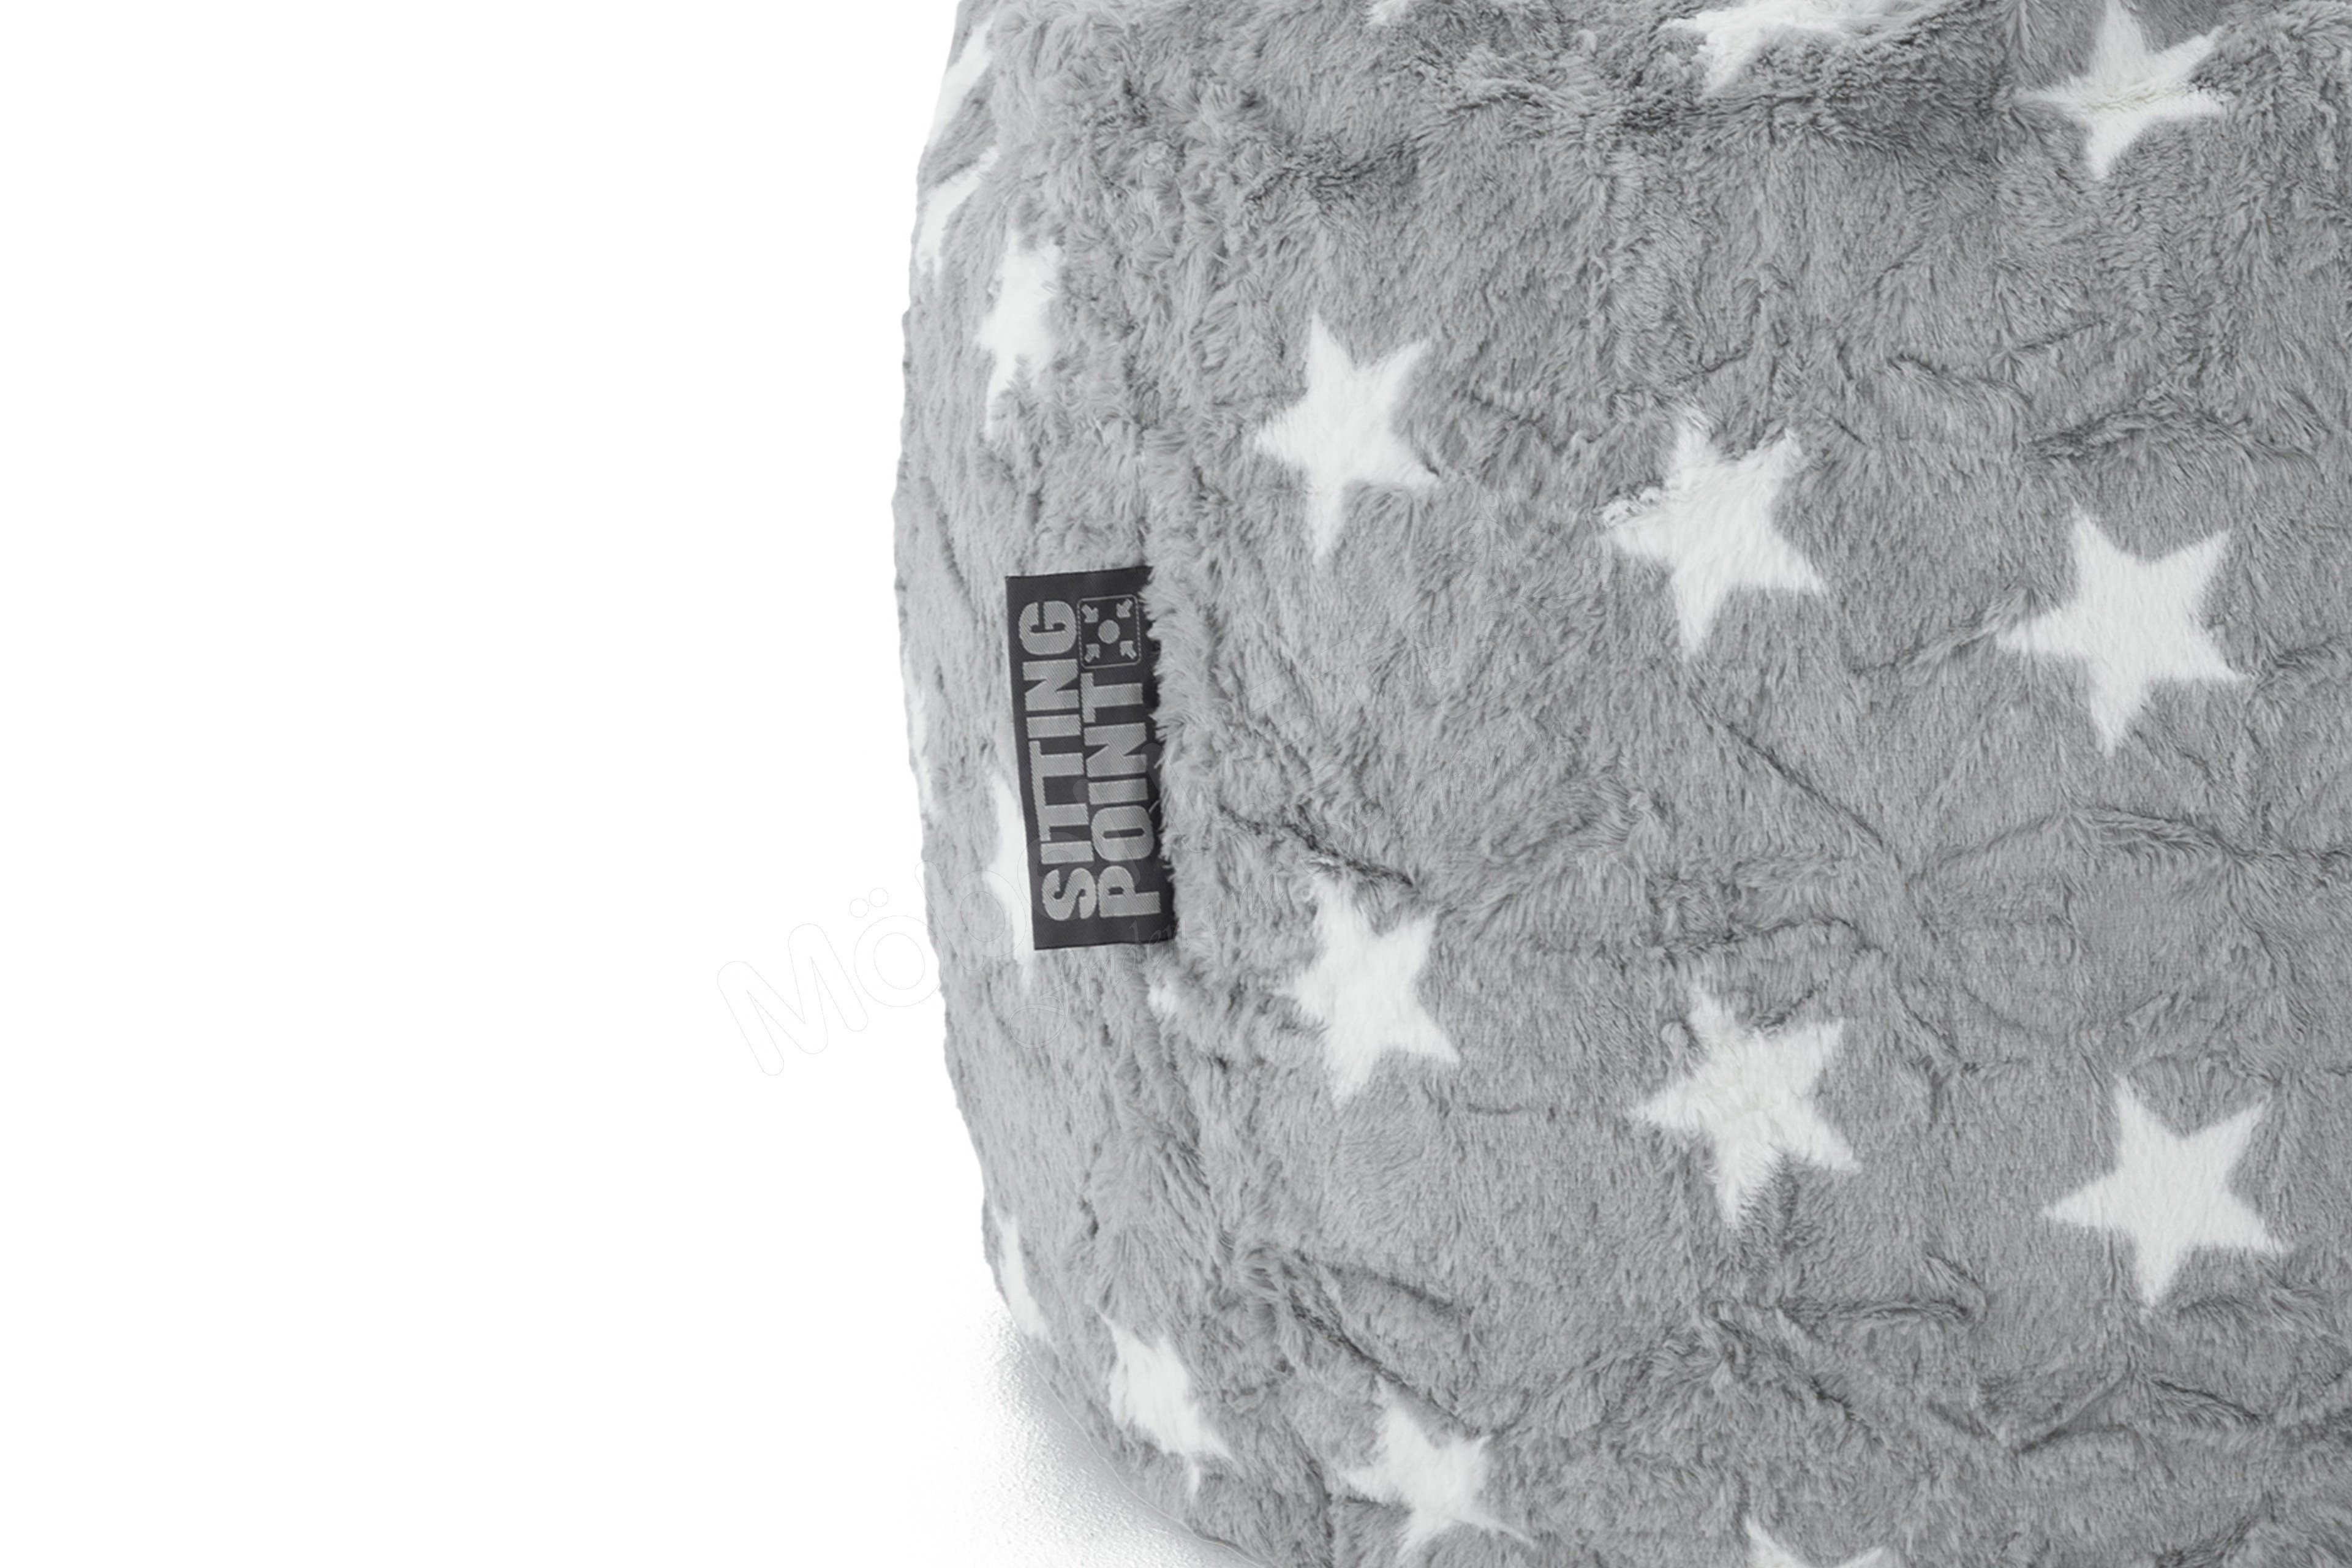 Magma Sitzsack BeanBag Fluffy Stars XL in Grau | Möbel Letz - Ihr  Online-Shop